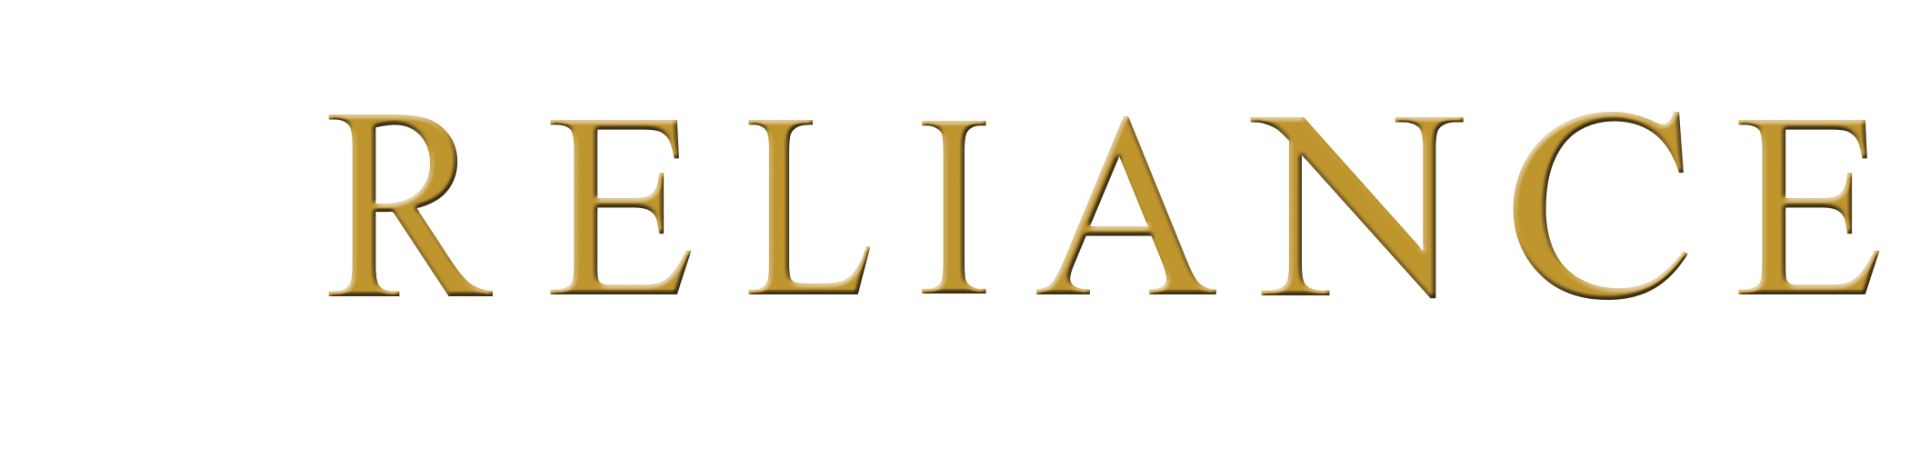 Reliance | Design | Build | Renovate In Indiana & Michigan